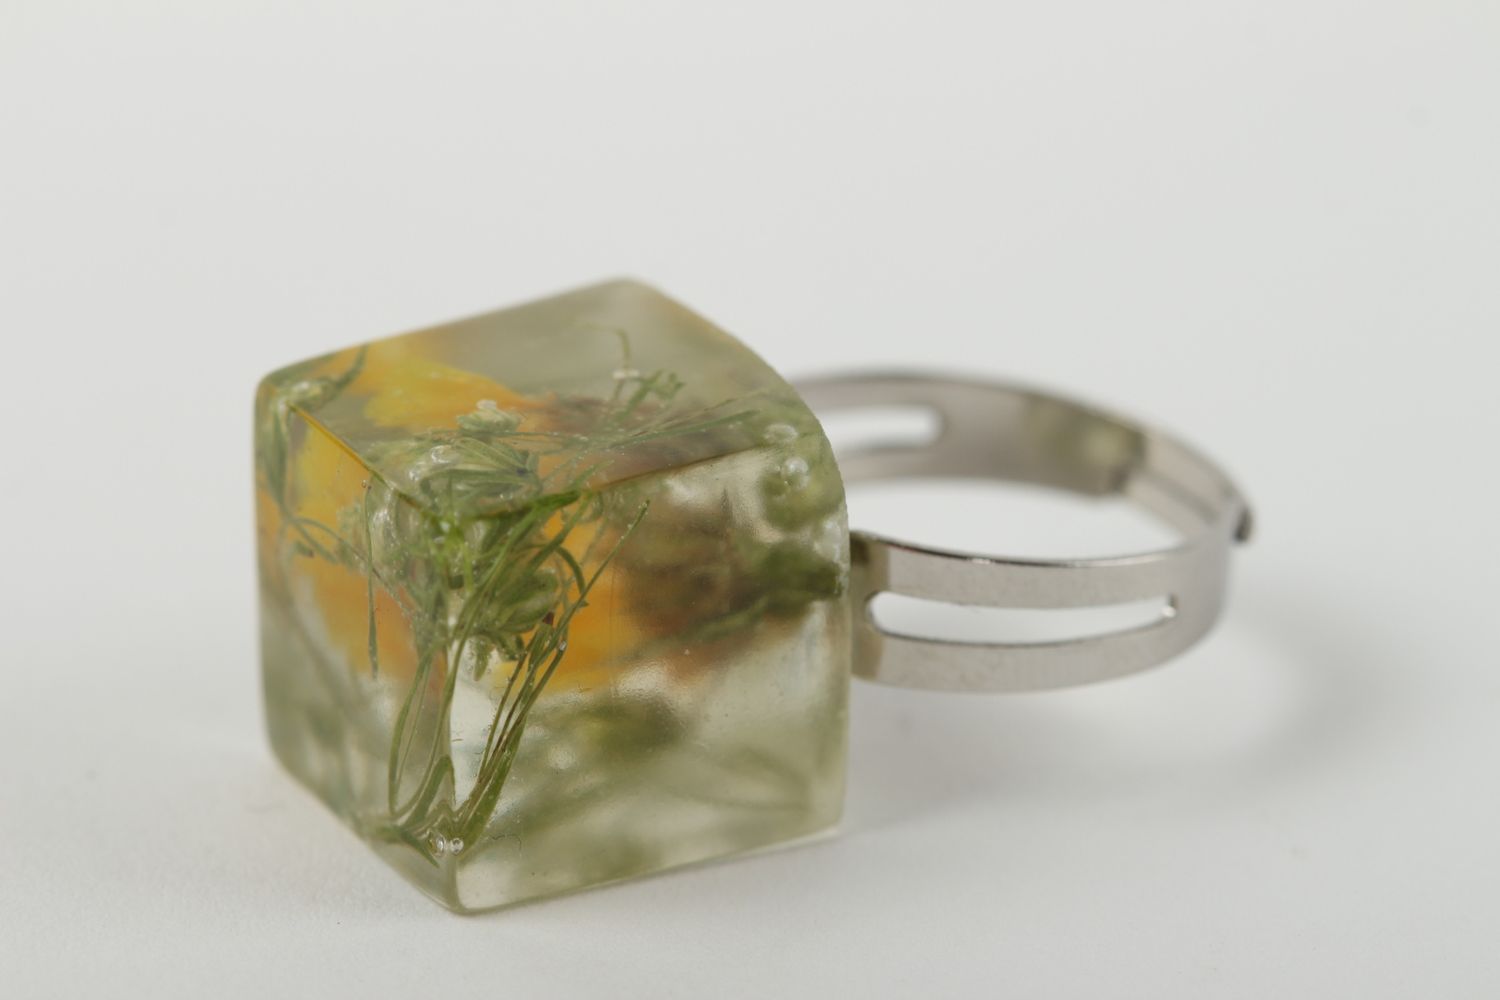 Handmade ring epoxy ring unusual jewelry designer accessory gift ideas photo 3